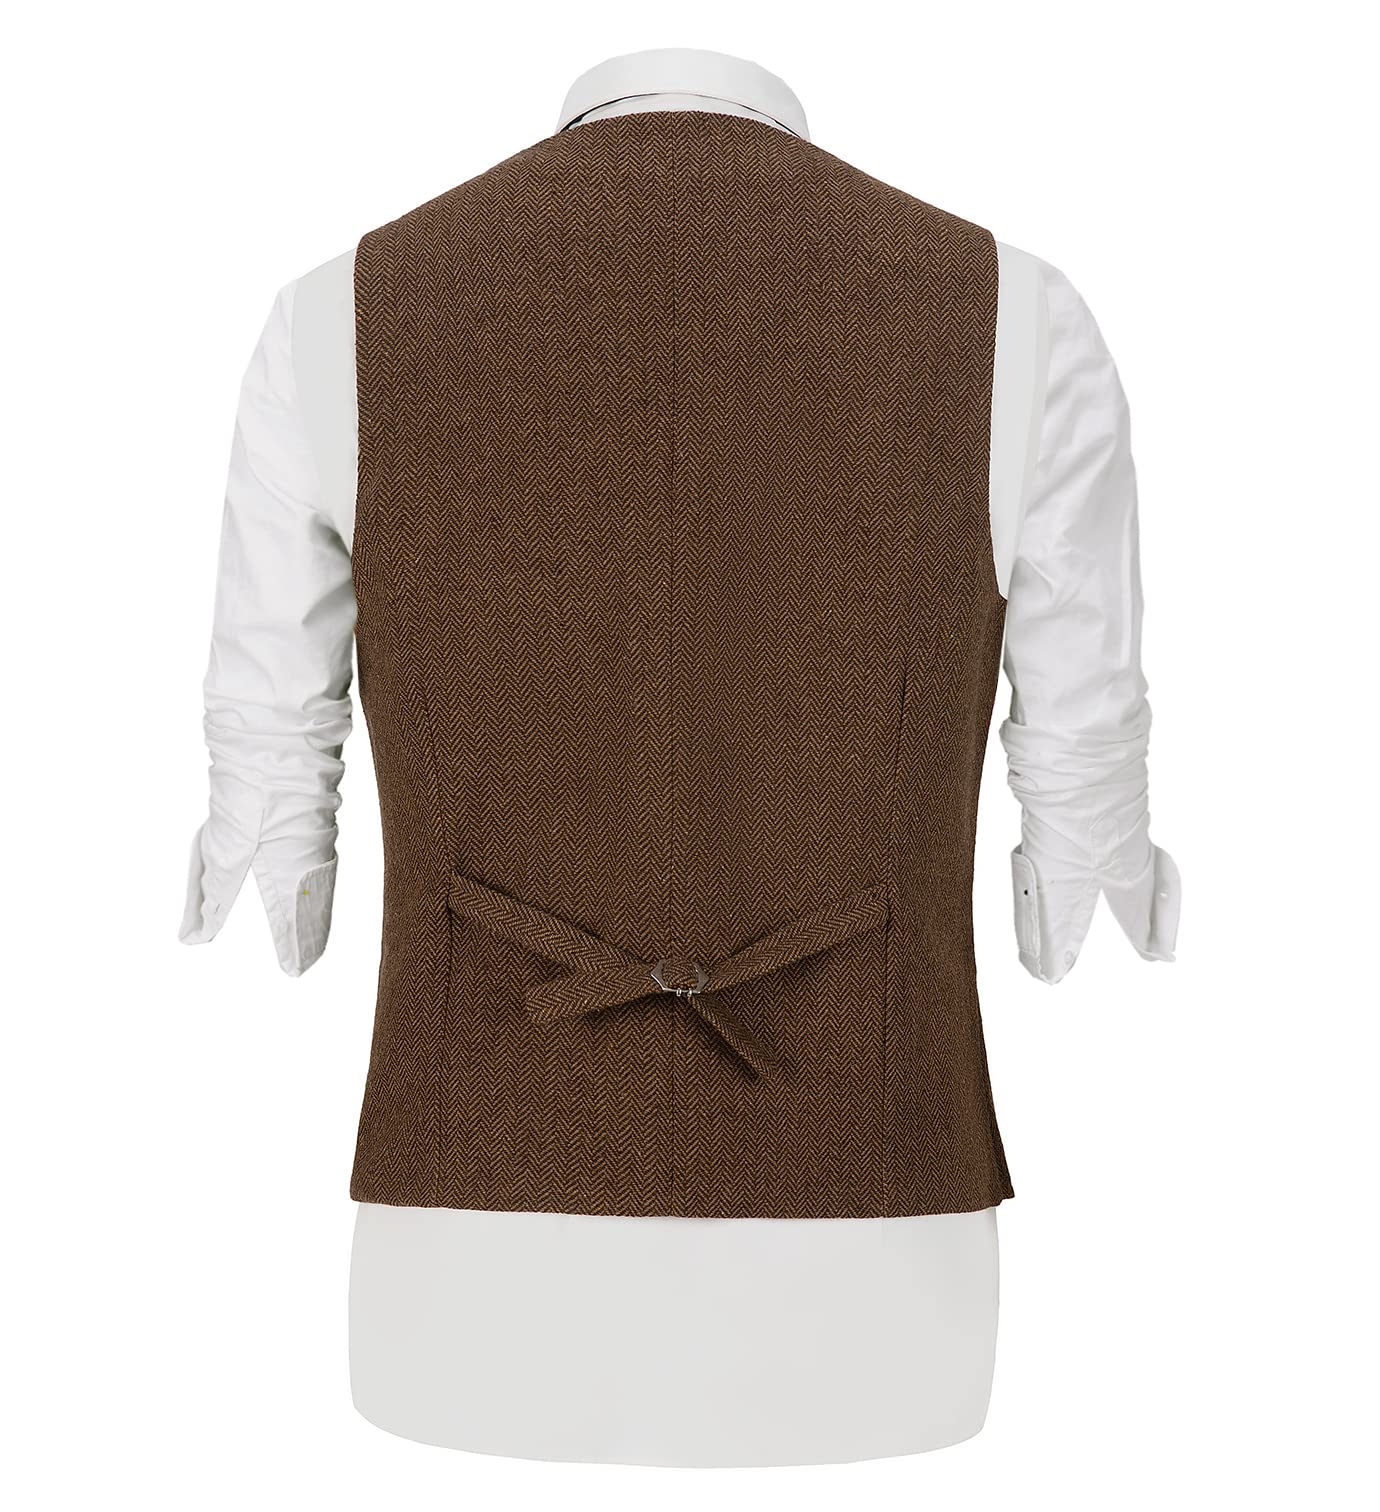 BYLUNTA Hunting Aged Mens Tweed Waistcoats Herringbone Vests Wedding Retro Casual Wool Business XS-3XL